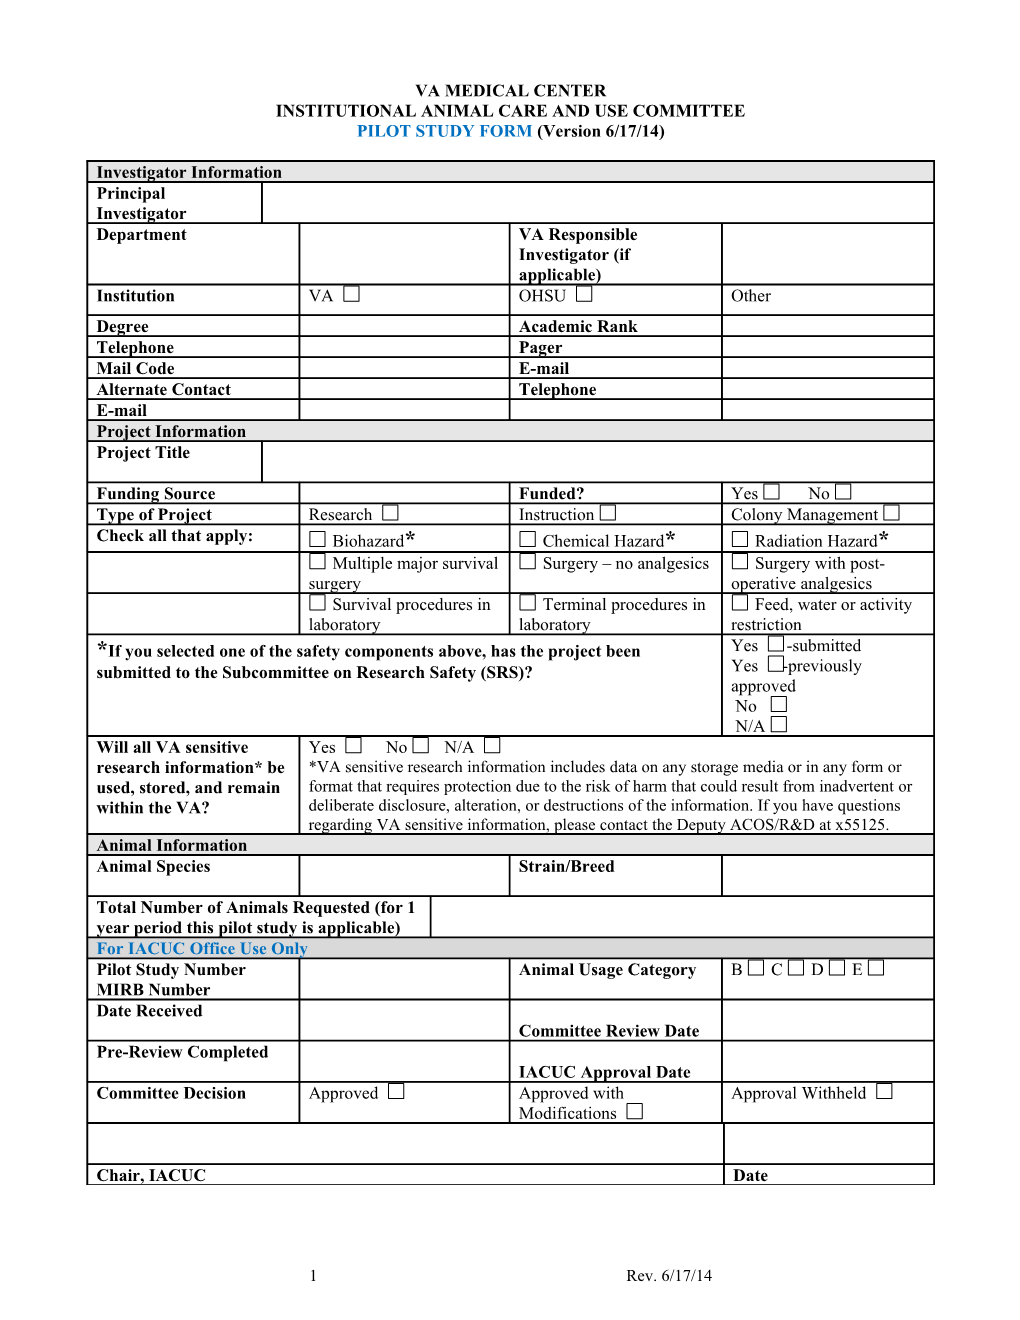 ACORP Pilot Study Form (Portland VA Medical Center)